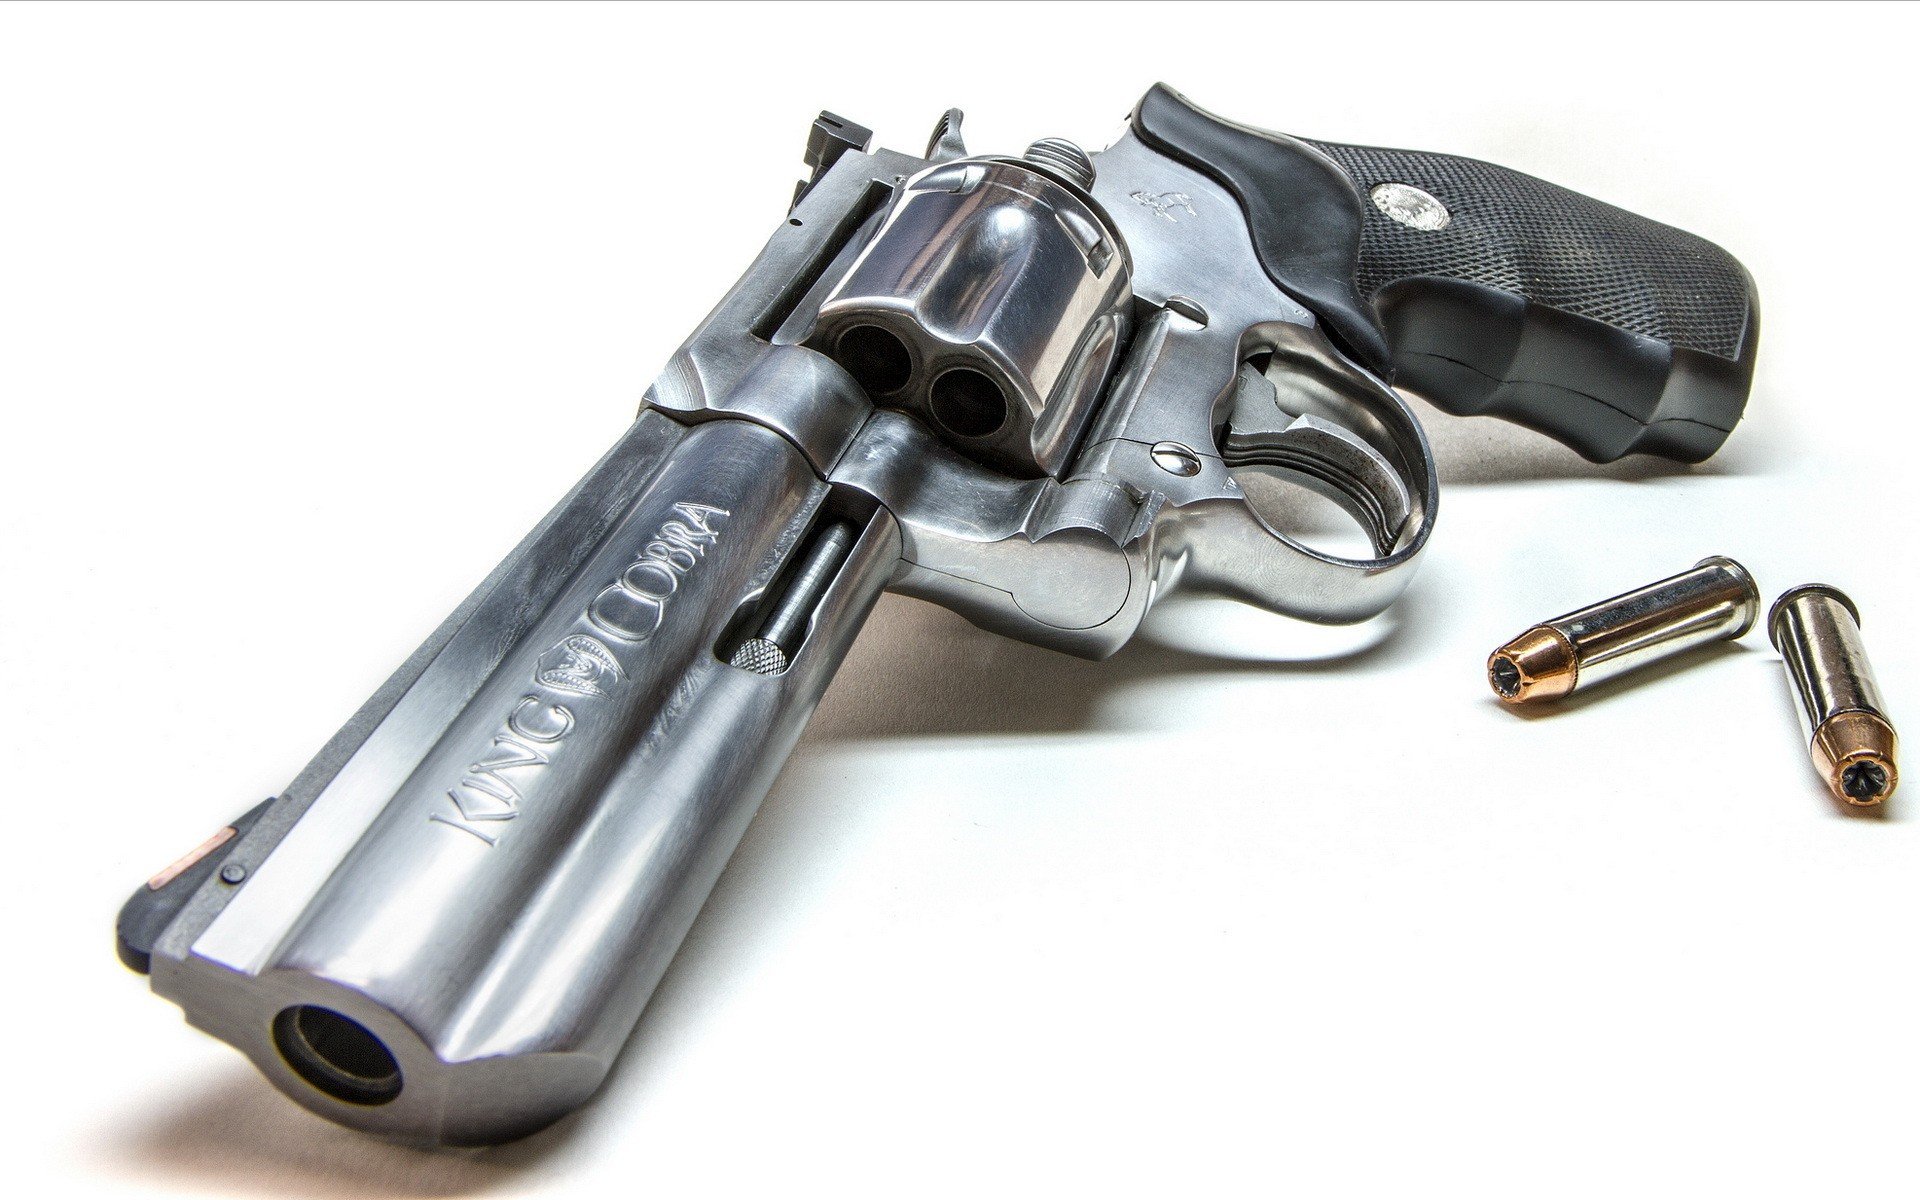 Amazing Colt Python Revolver Pictures & Backgrounds